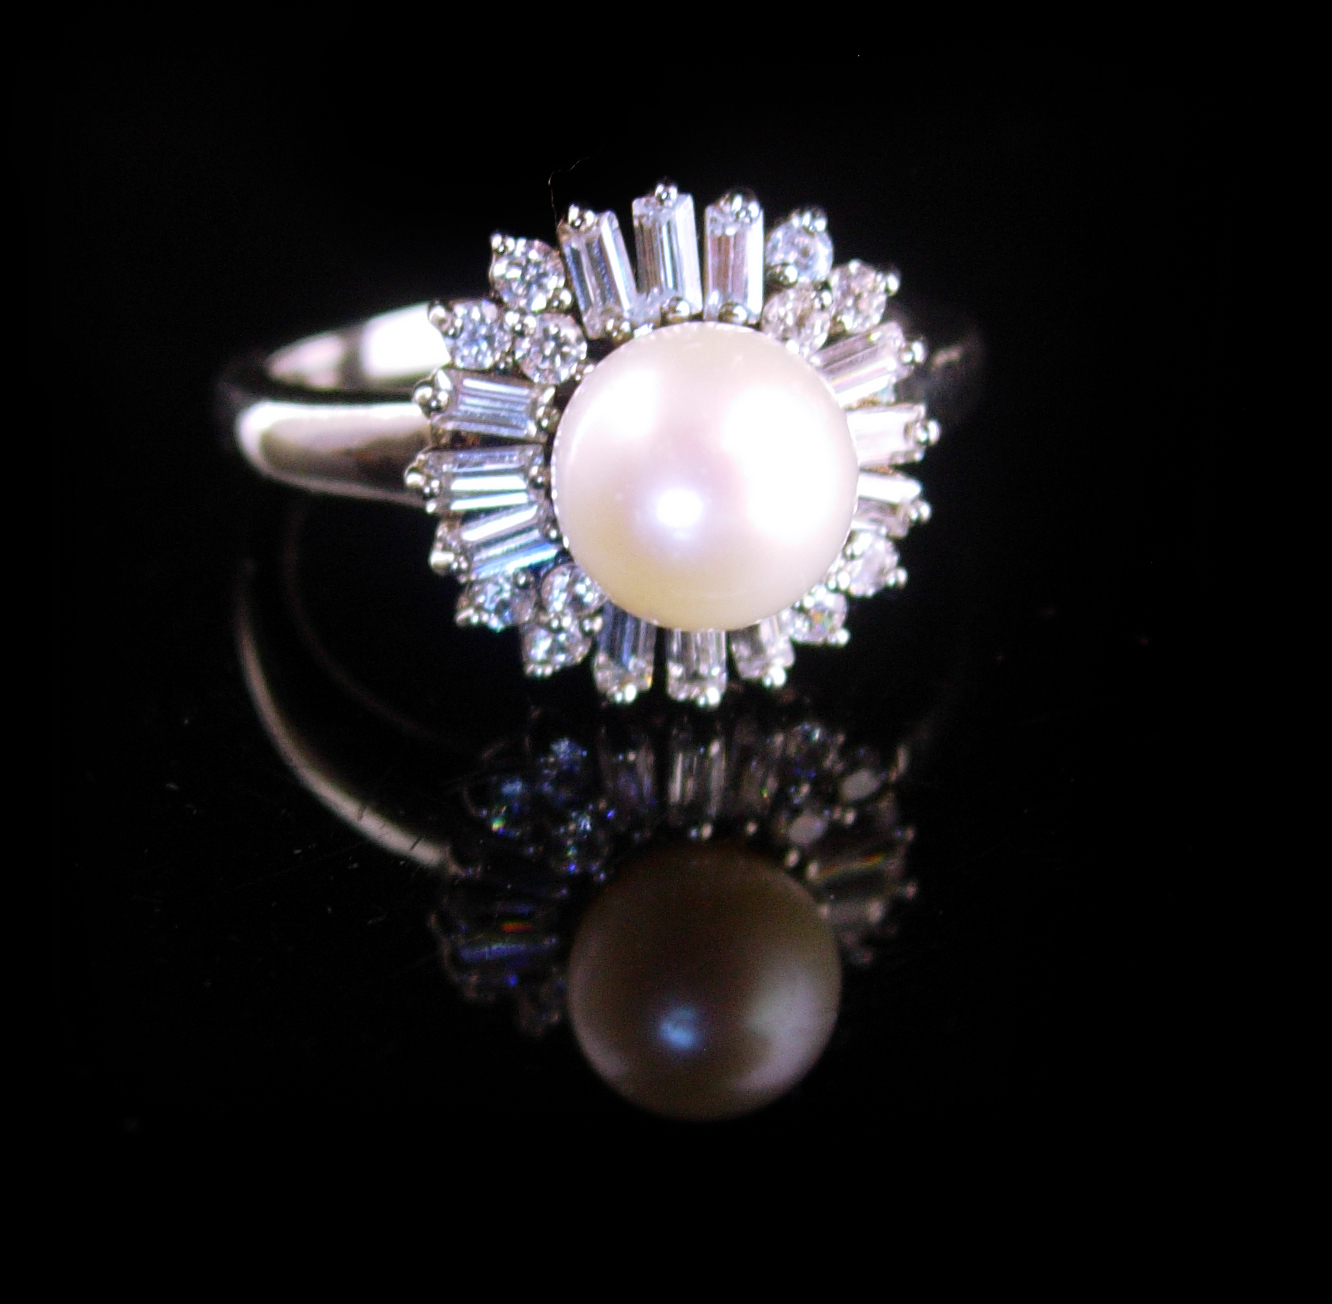 Primary image for Vintage genuine pearl cocktail ring / Sterling baguette bridal ring /  size 9 - 